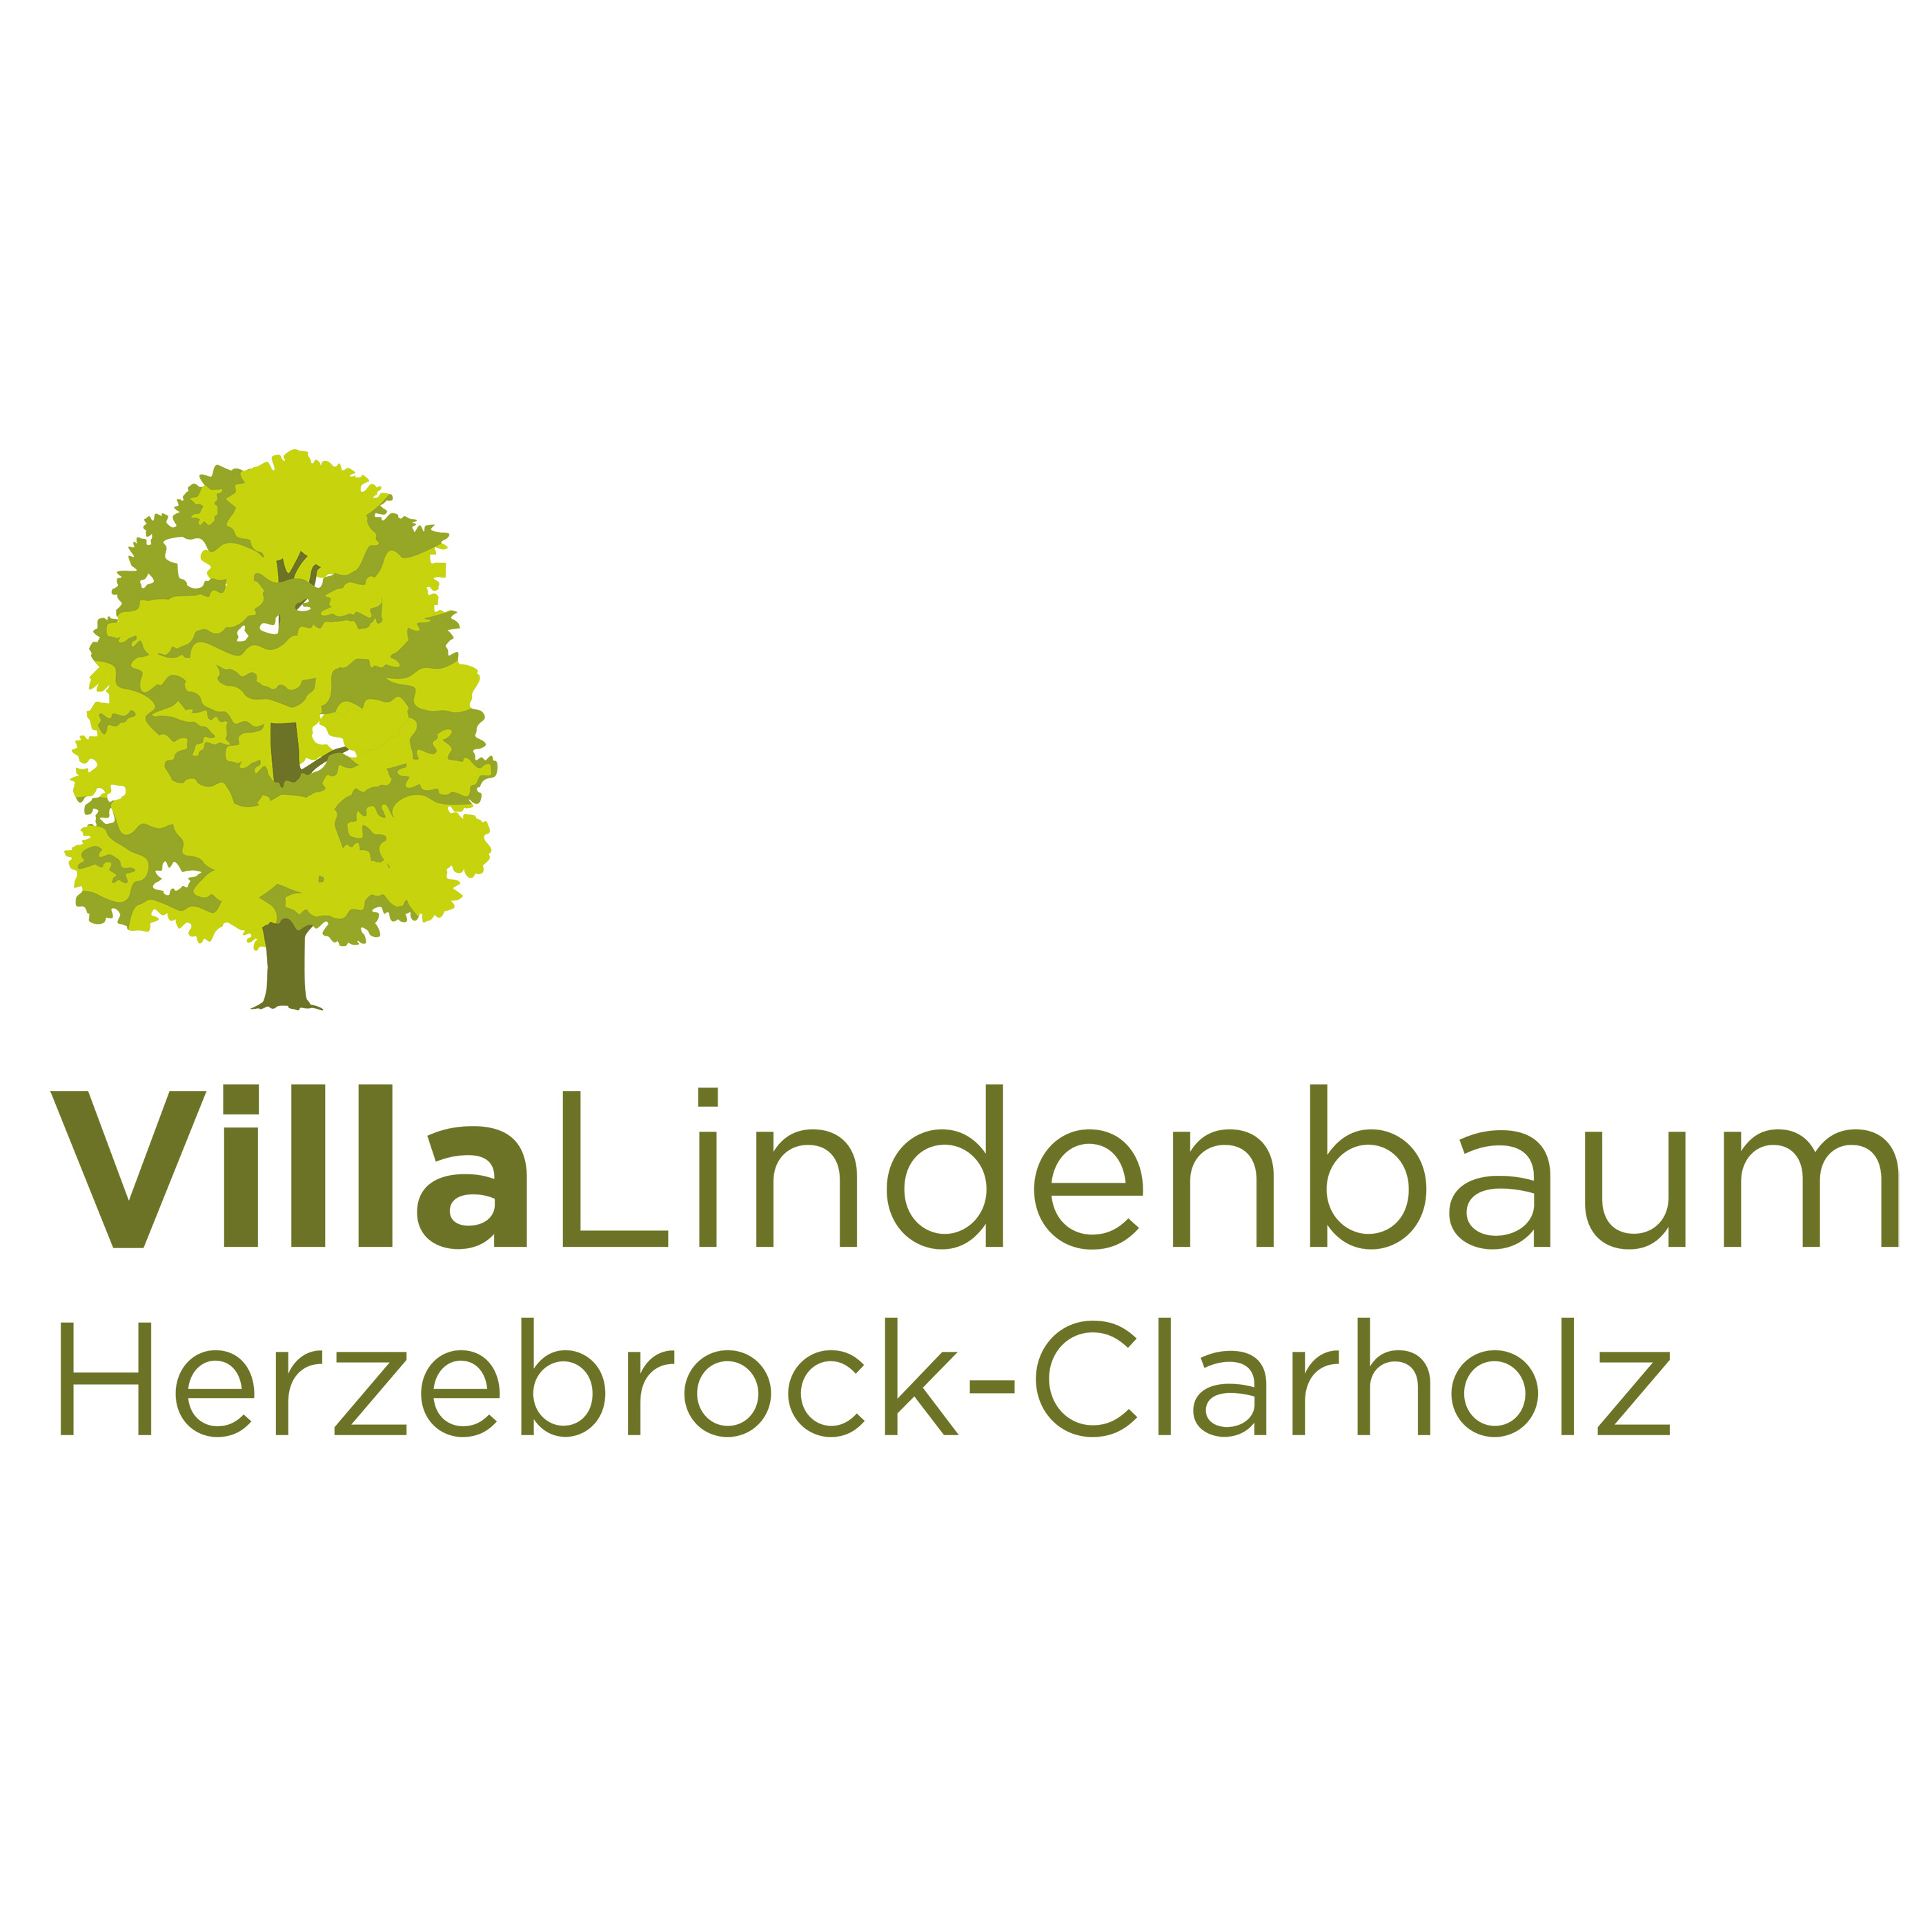 Villa Lindenbaum
Herzebrock-Clarholz
pme Familienservice